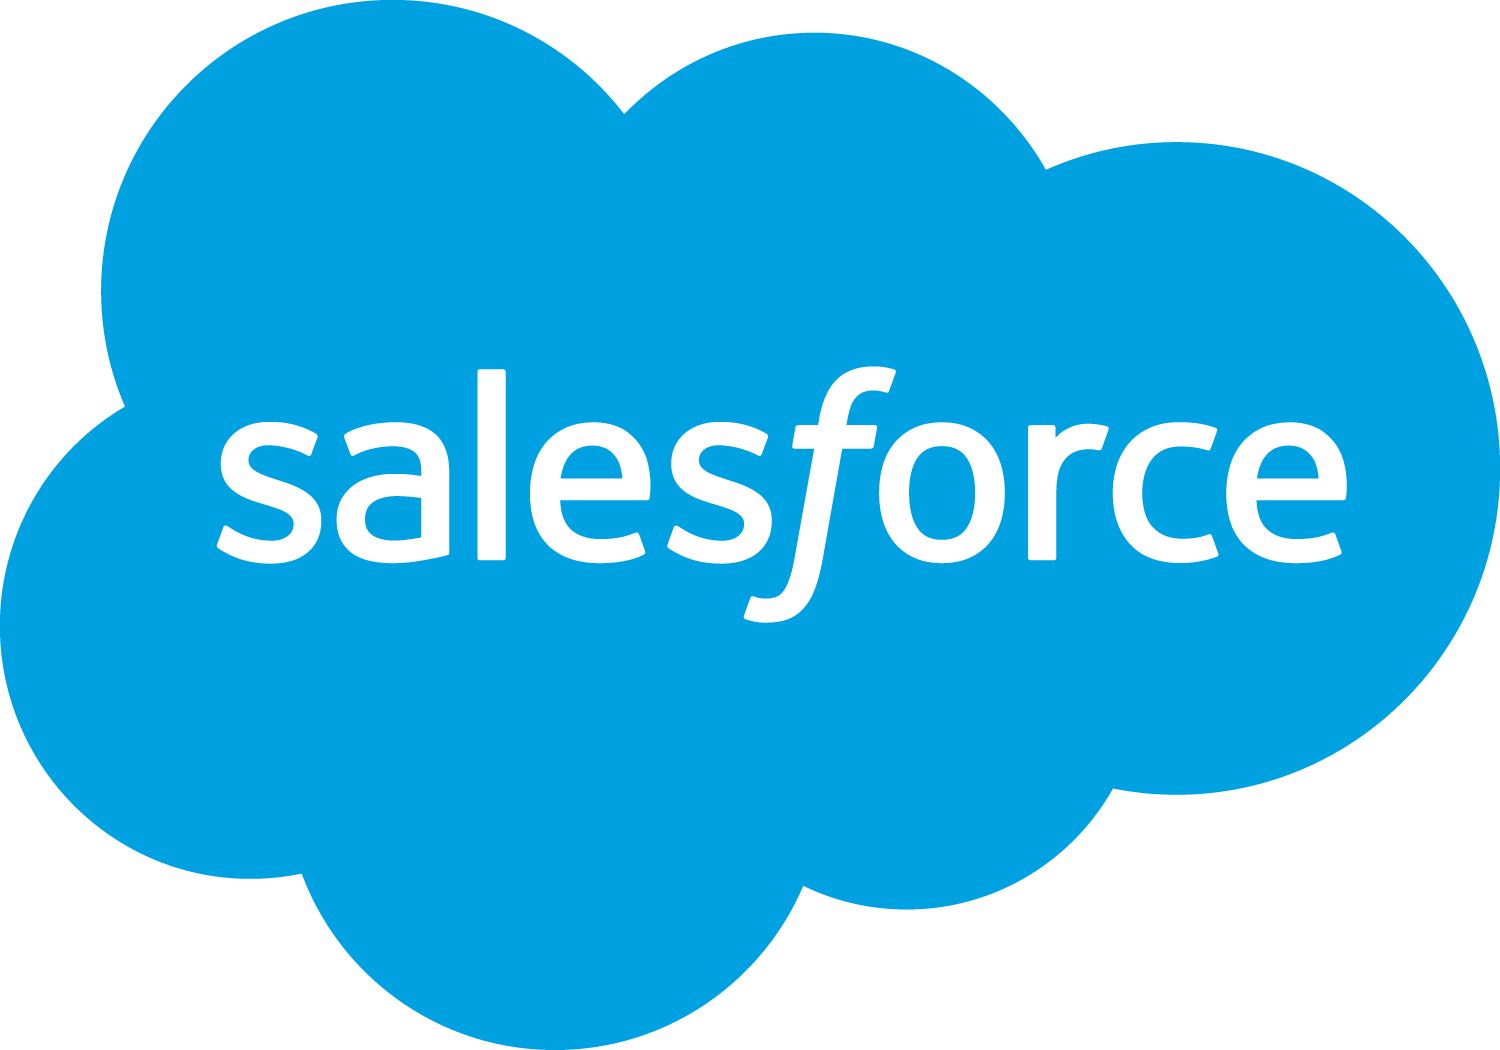 Salesforce Partnership